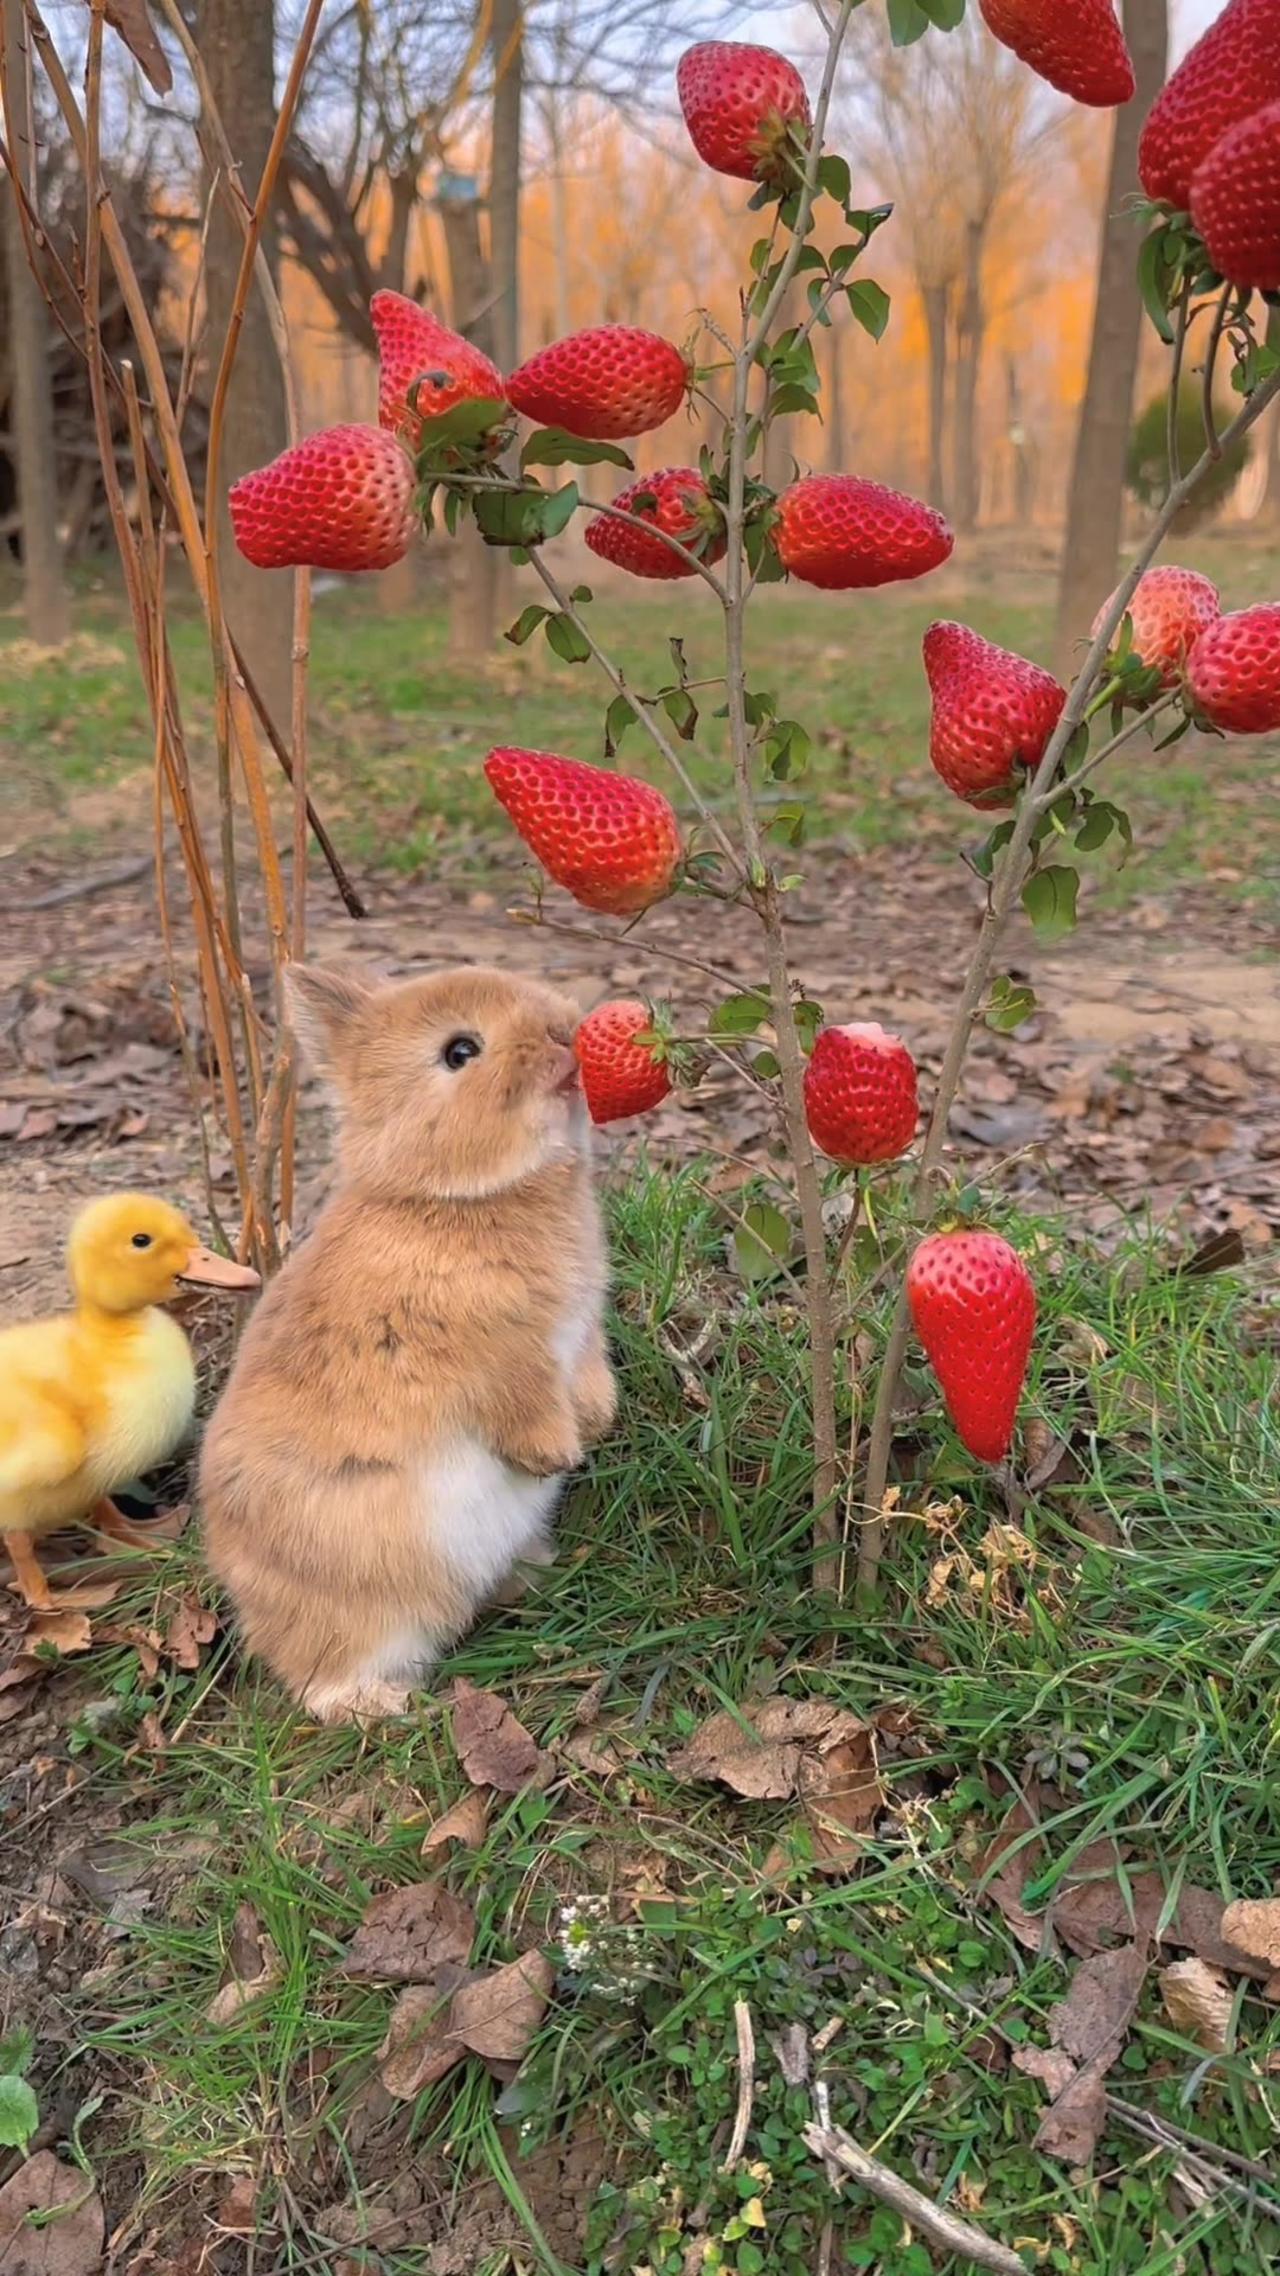 Cute baby rabbit 🐰😀🐰